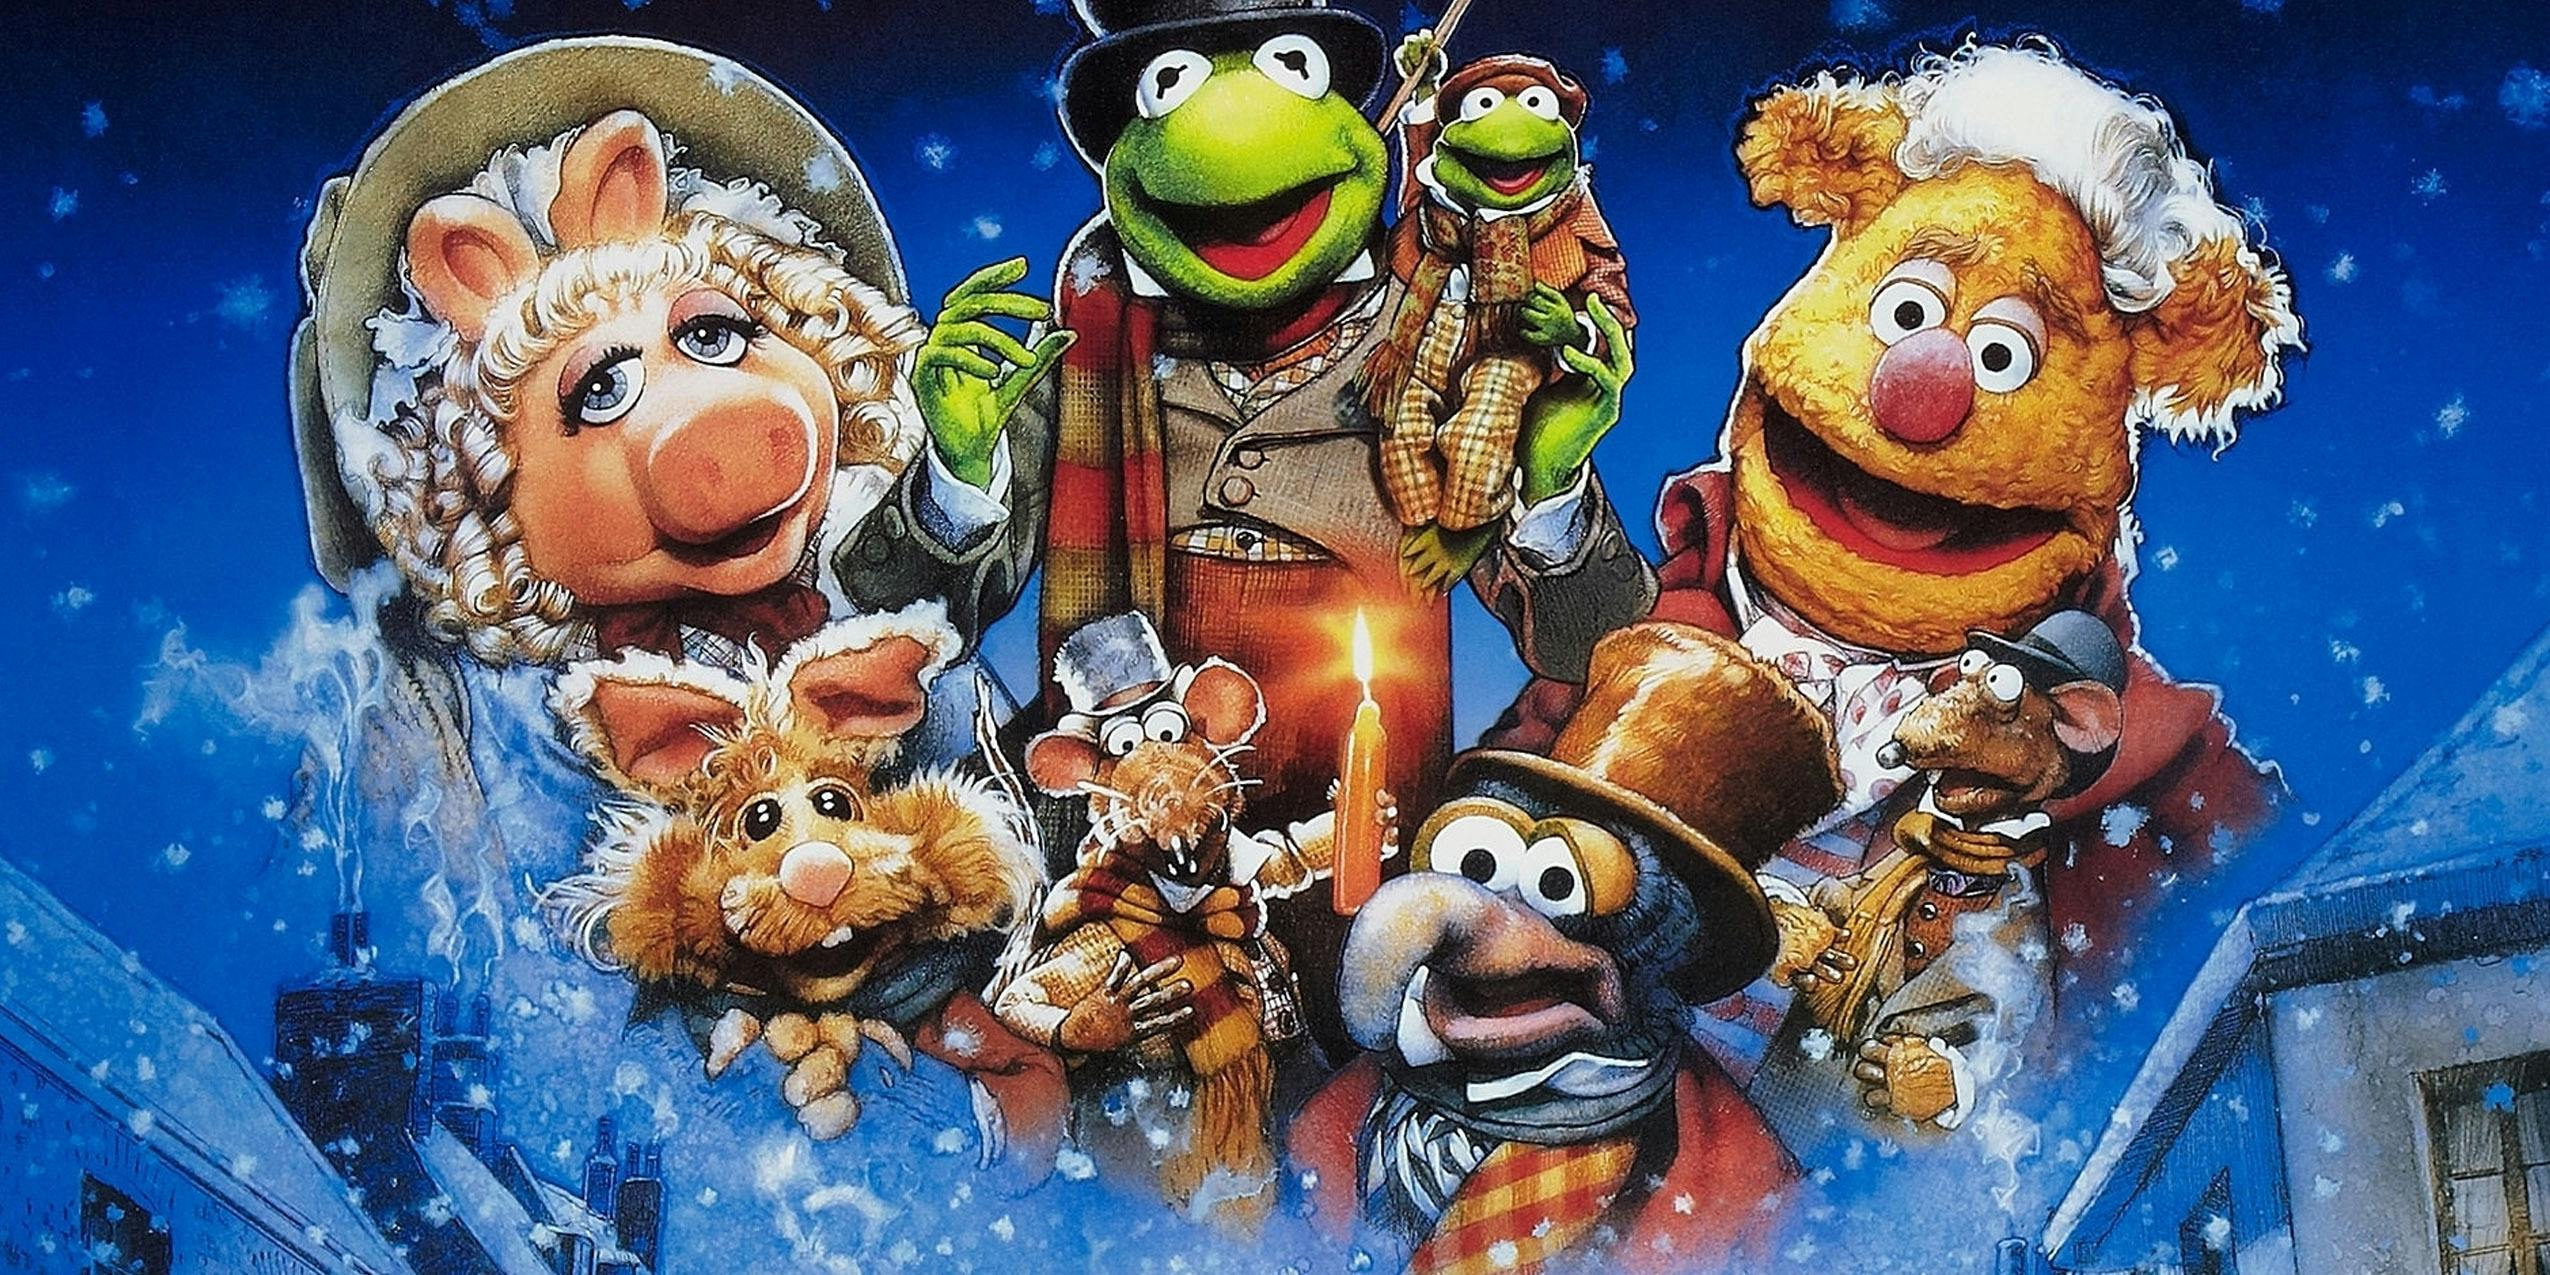 Muppet Christmas Carol movie poster featuring Kermit as Bob Cratchet.